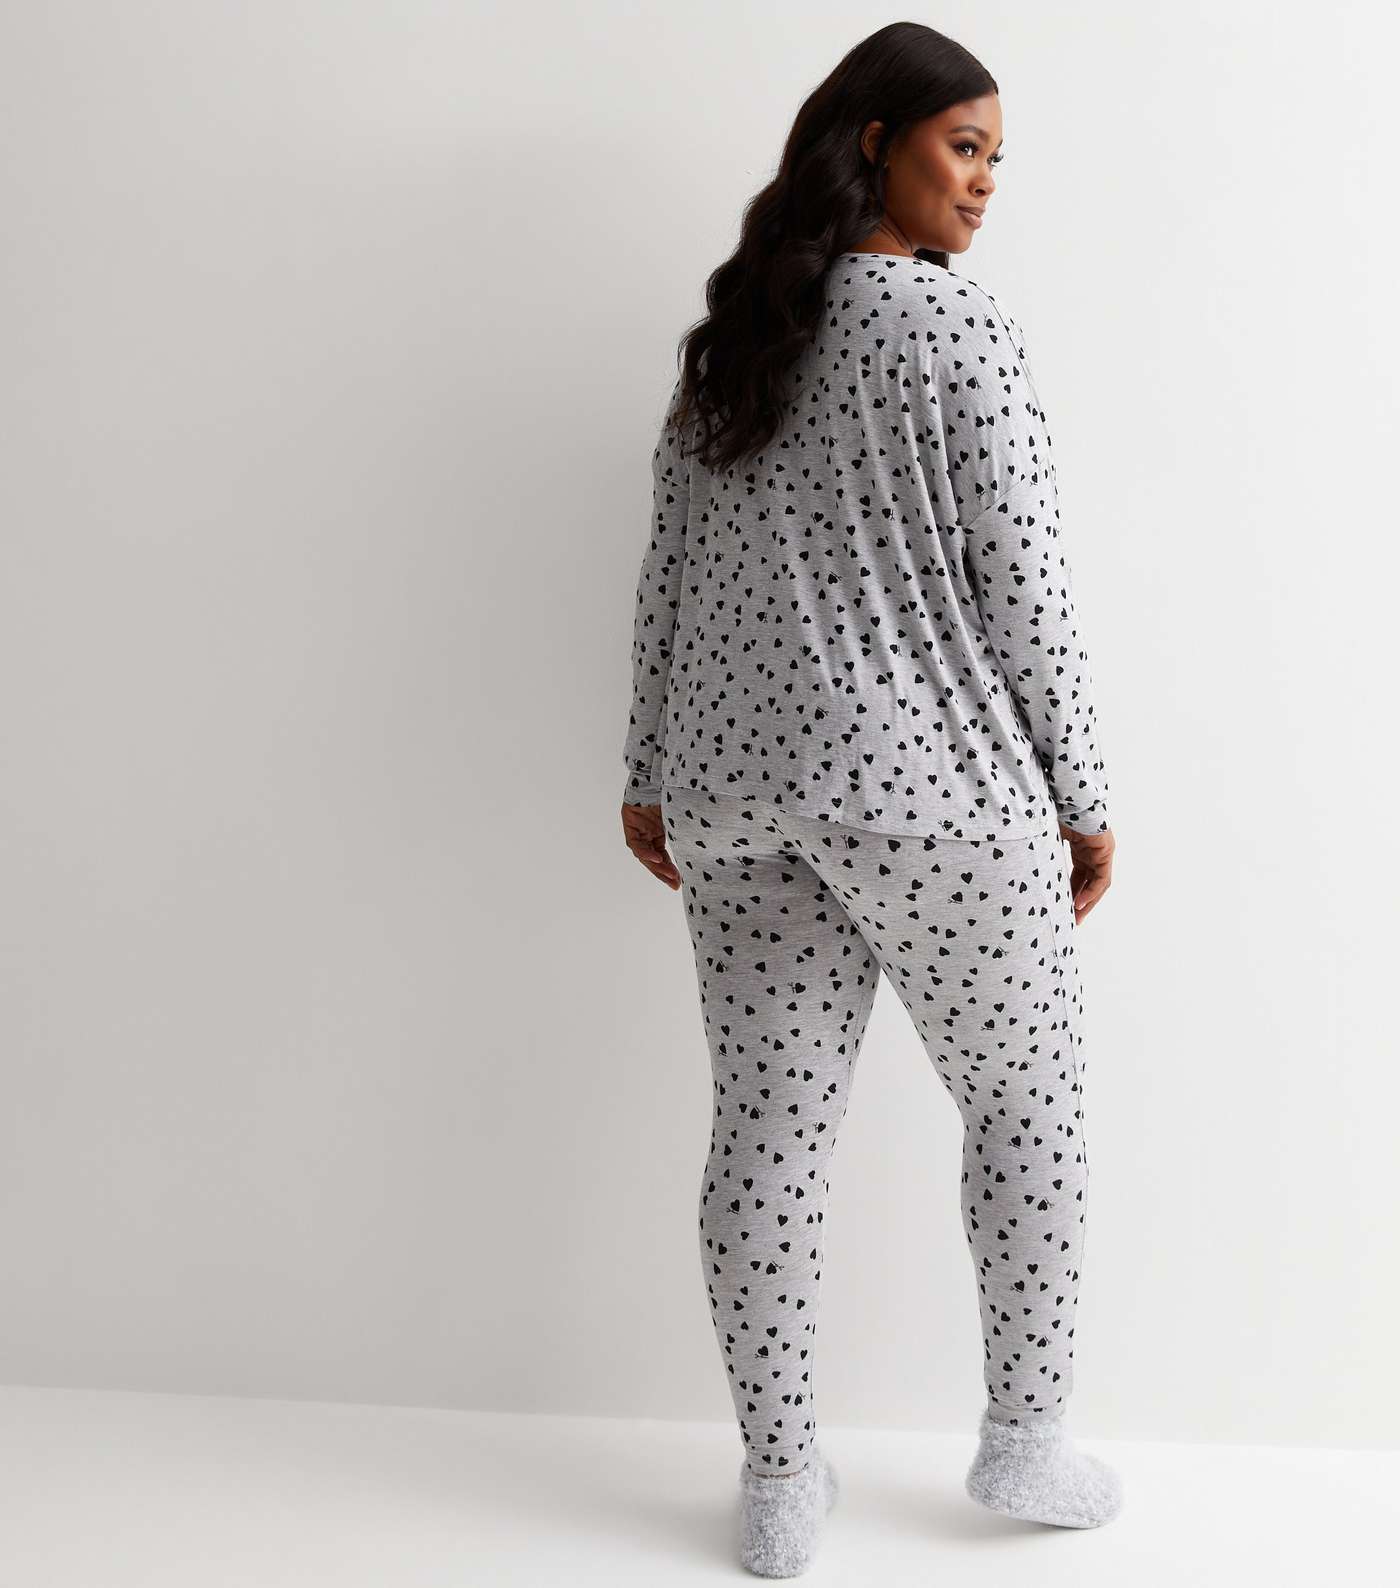 Curves Pale Grey Leggings Pyjama Set with Heart Print Image 4